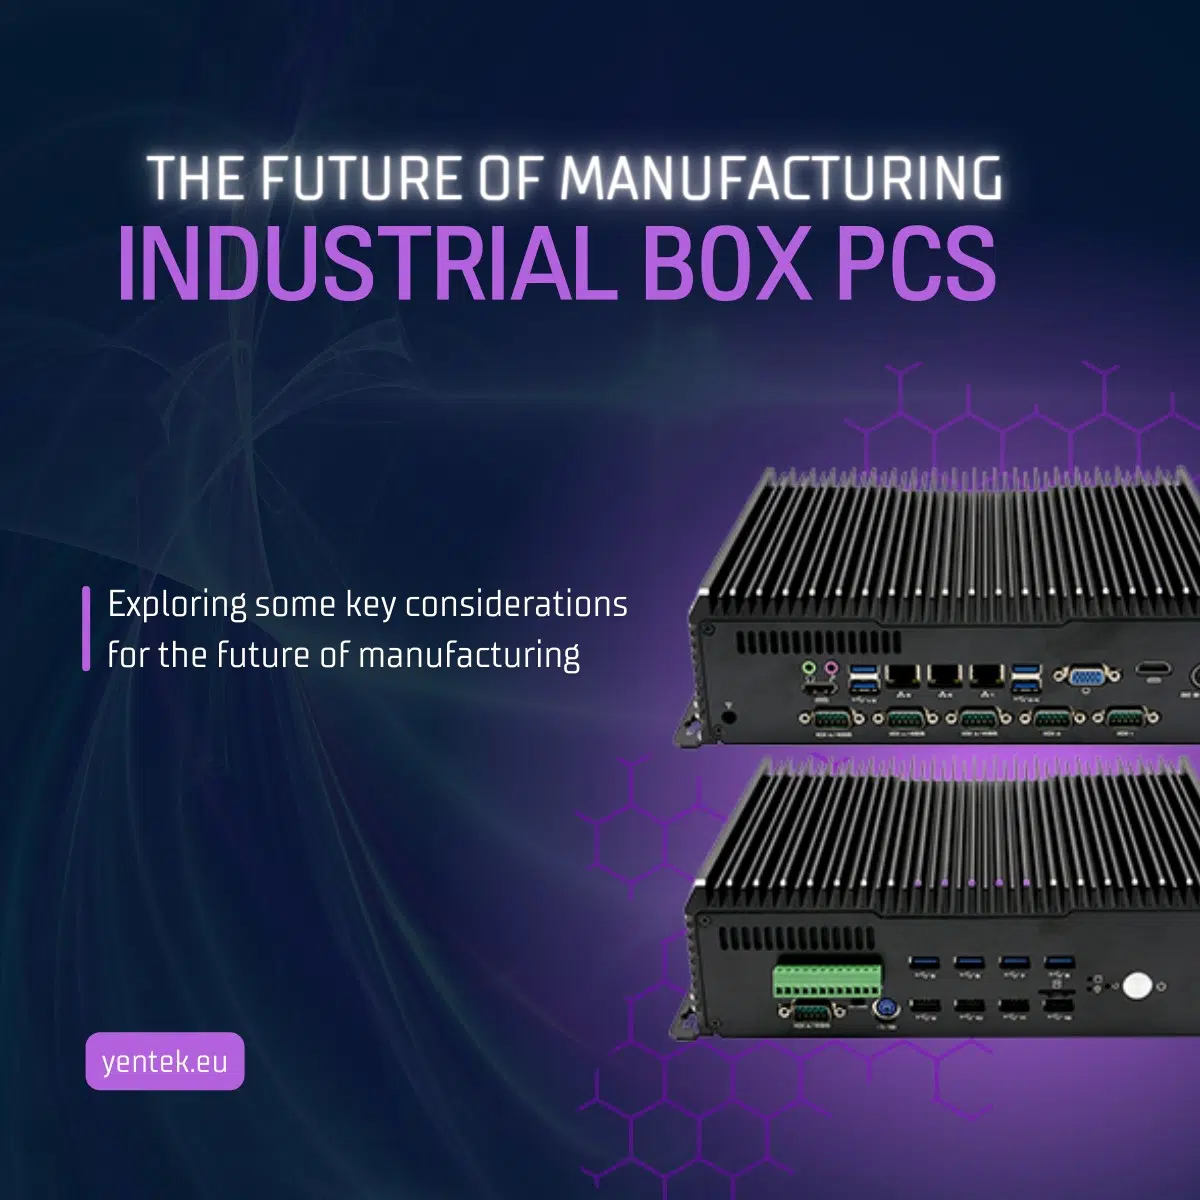 Industrial Box PCs key Applications, The Future of Manufacturing via Box pcs